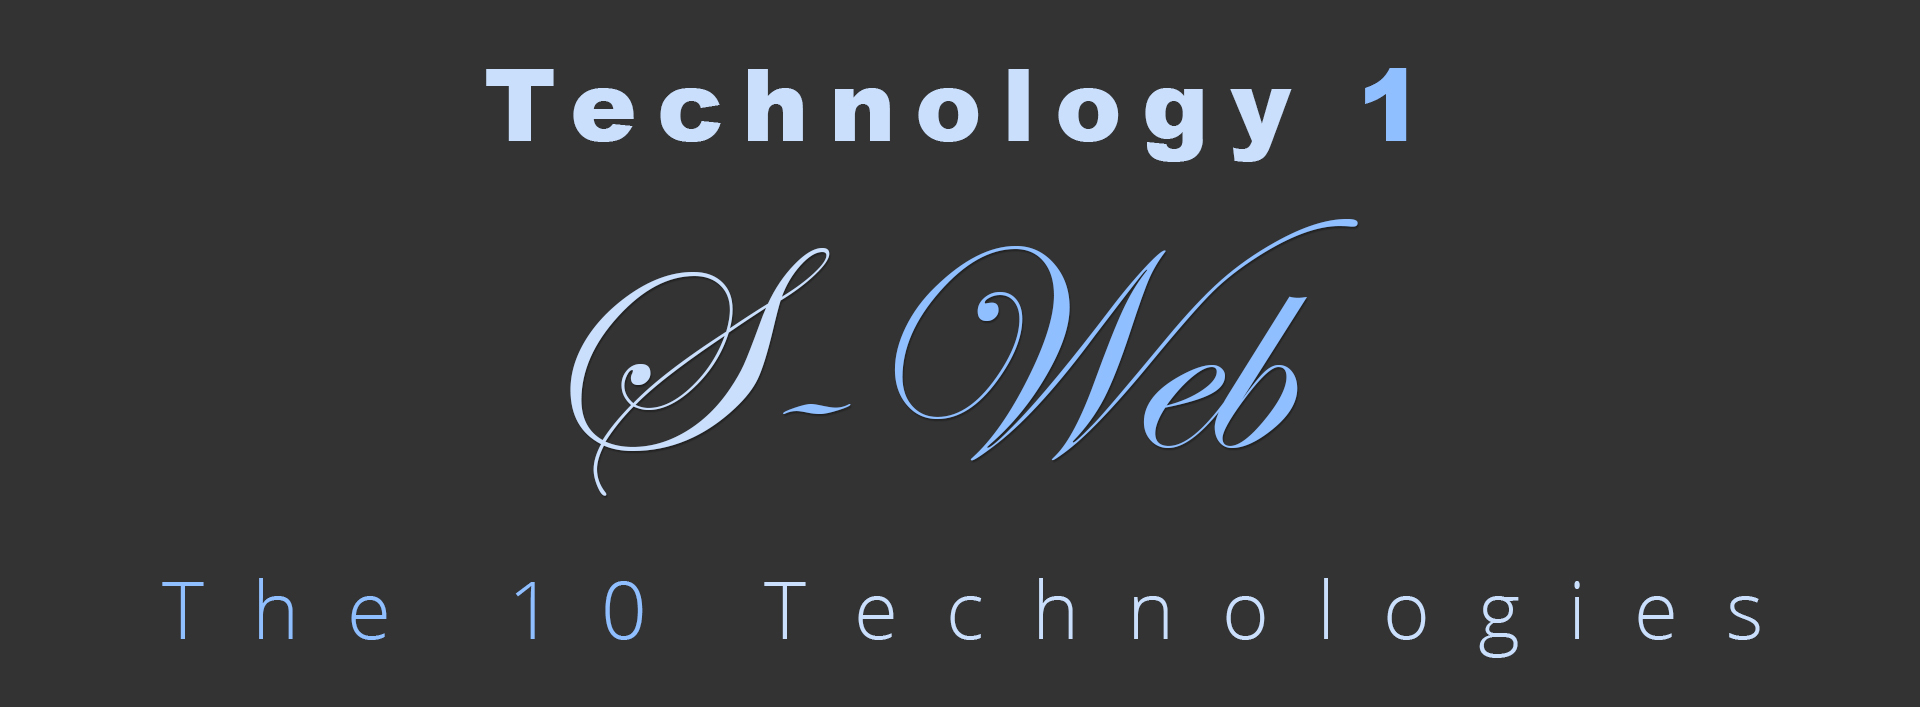 The S-Web CMS - Technology 1